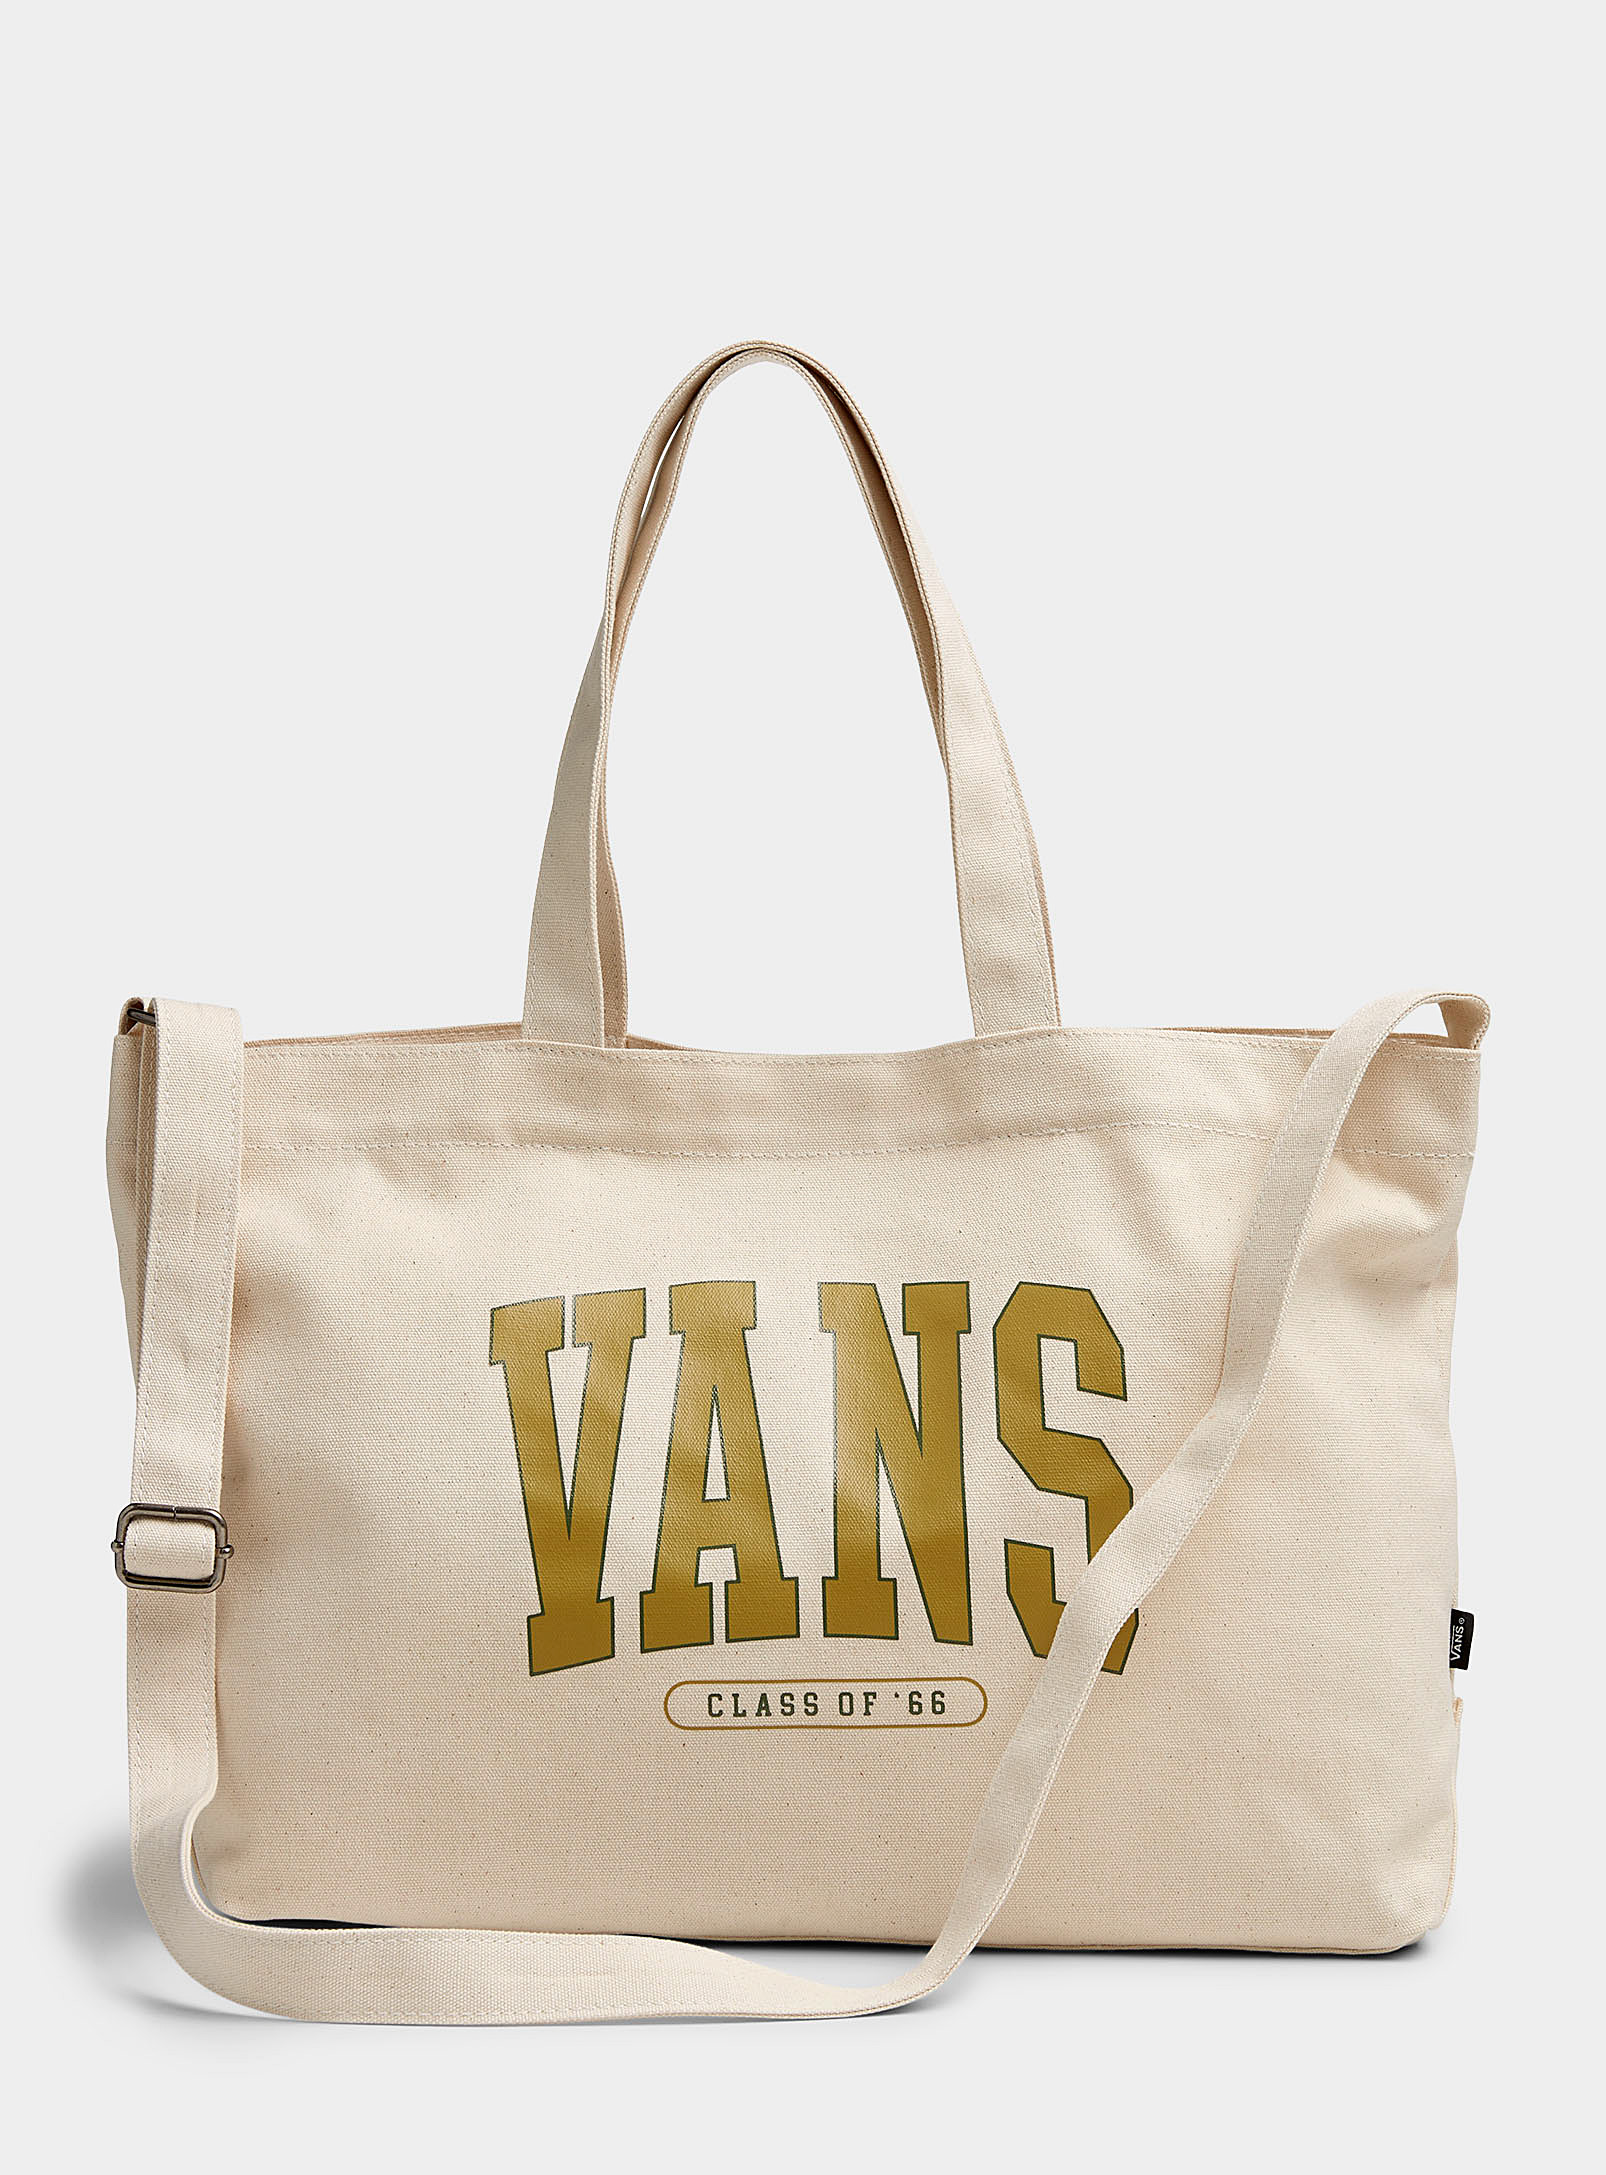 Vans - Men's Varsity logo Tote Bag